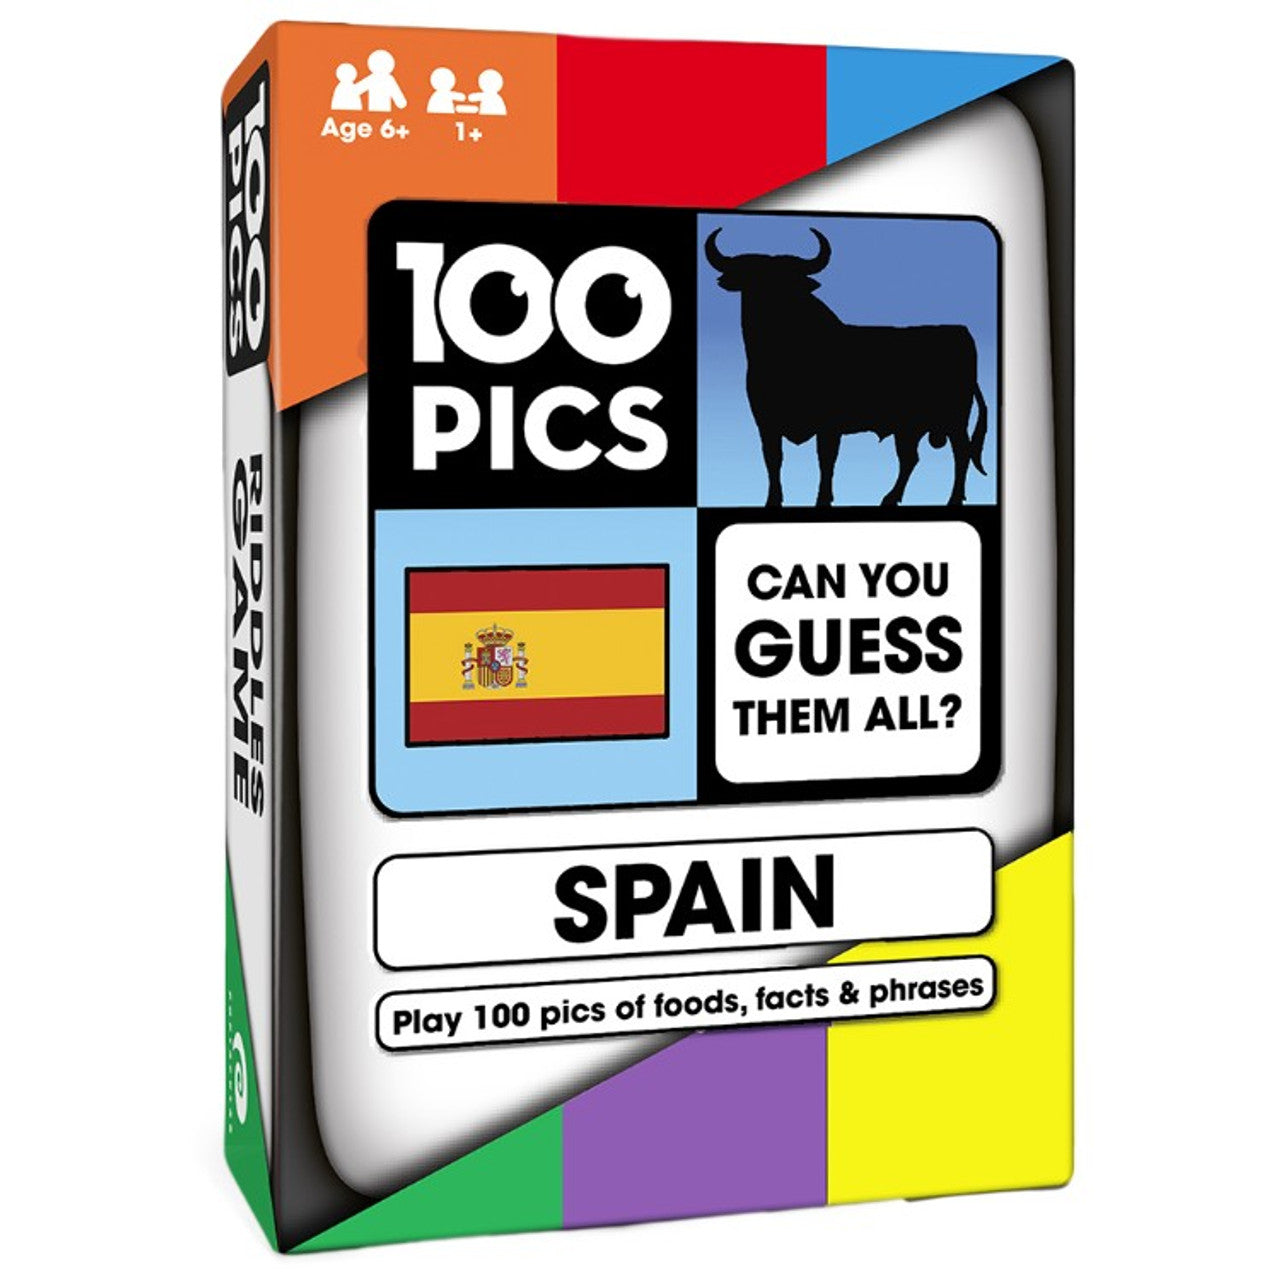 100 Pics: Spain